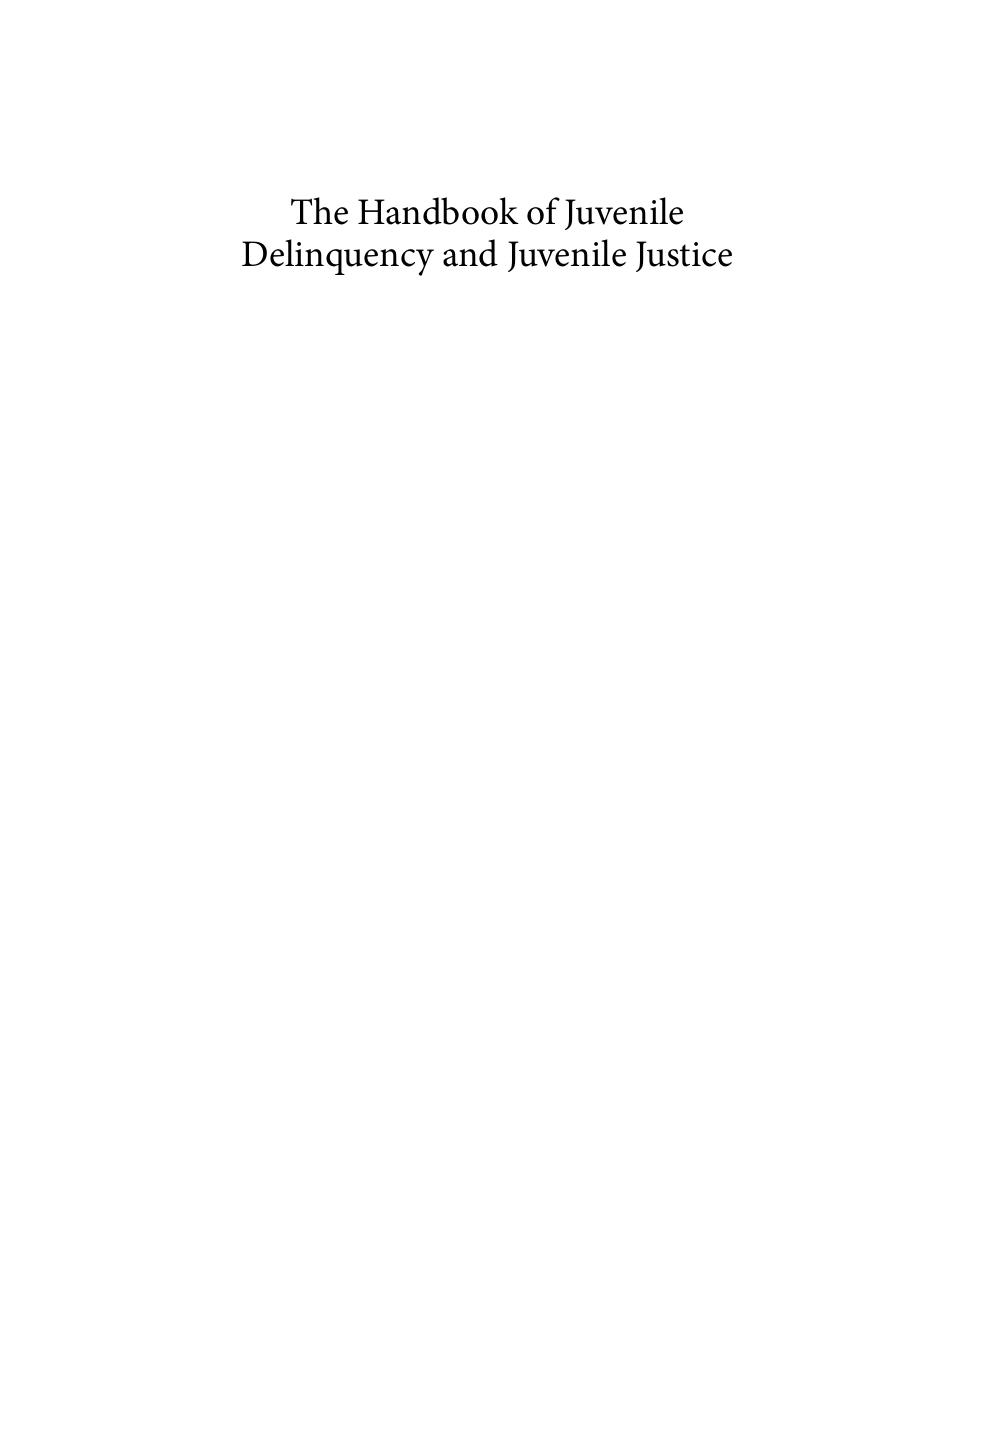 The Handbook of Juvenile Delinquency and Juvenile Justice 2015